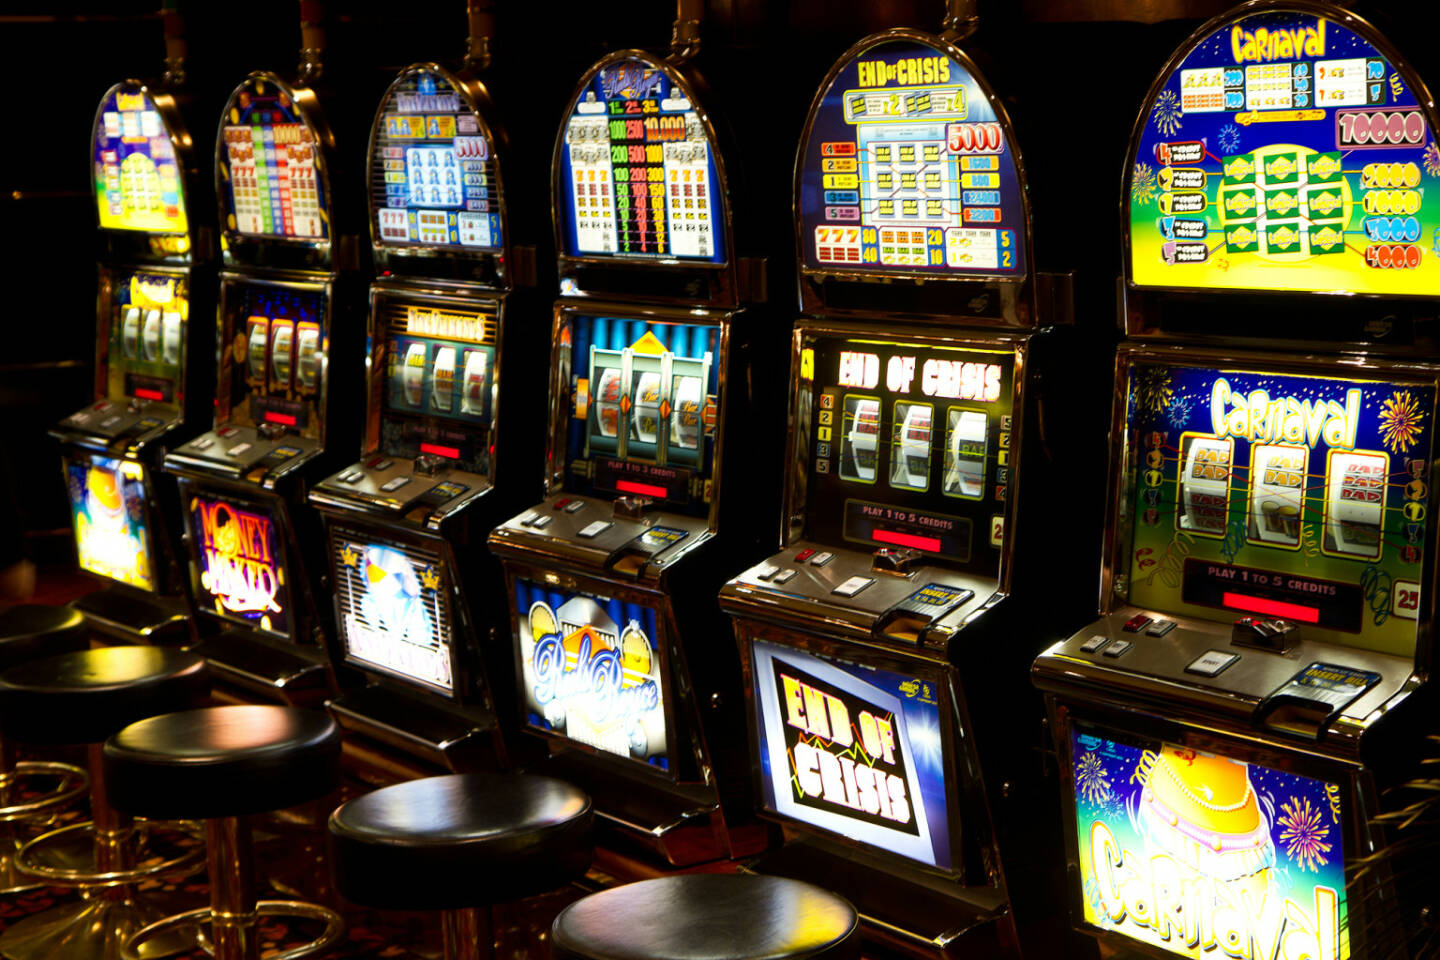 Casino, slot machines, einarmige Banditen, Glück - https://de.depositphotos.com/27037999/stock-photo-slot-machine-in-casino.html